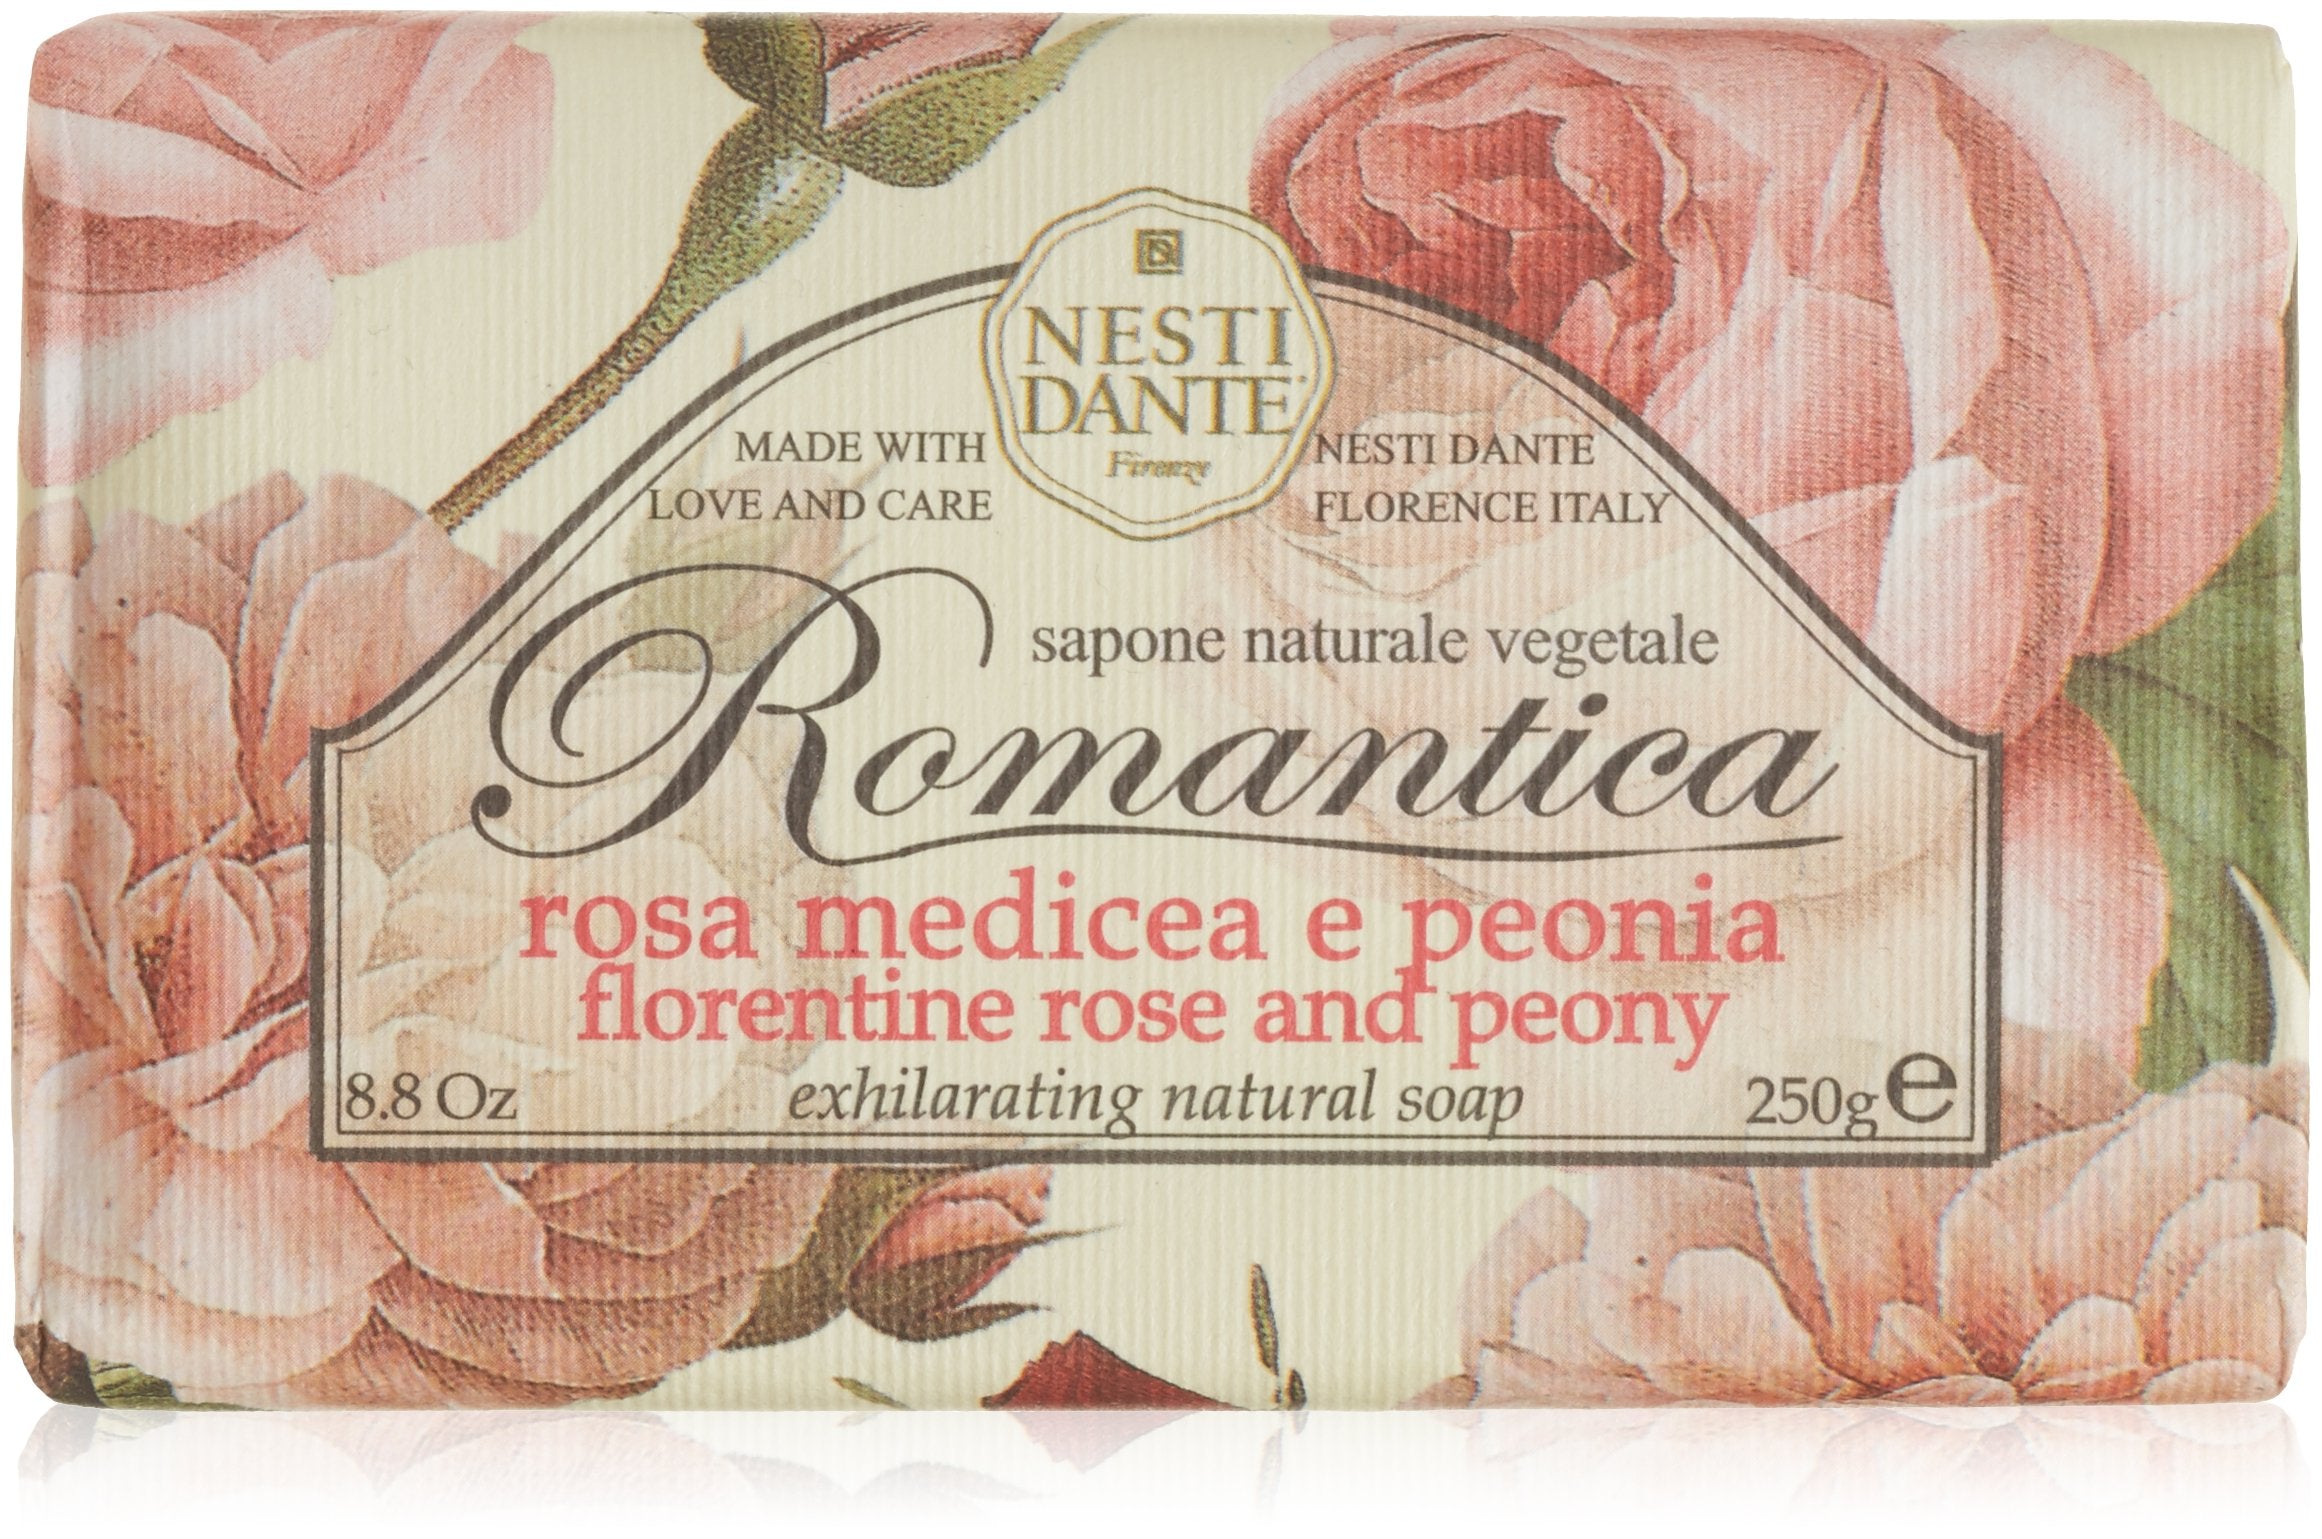 NESTI DANTE Romantica, Florentine Rose & Peony Soap 250 g